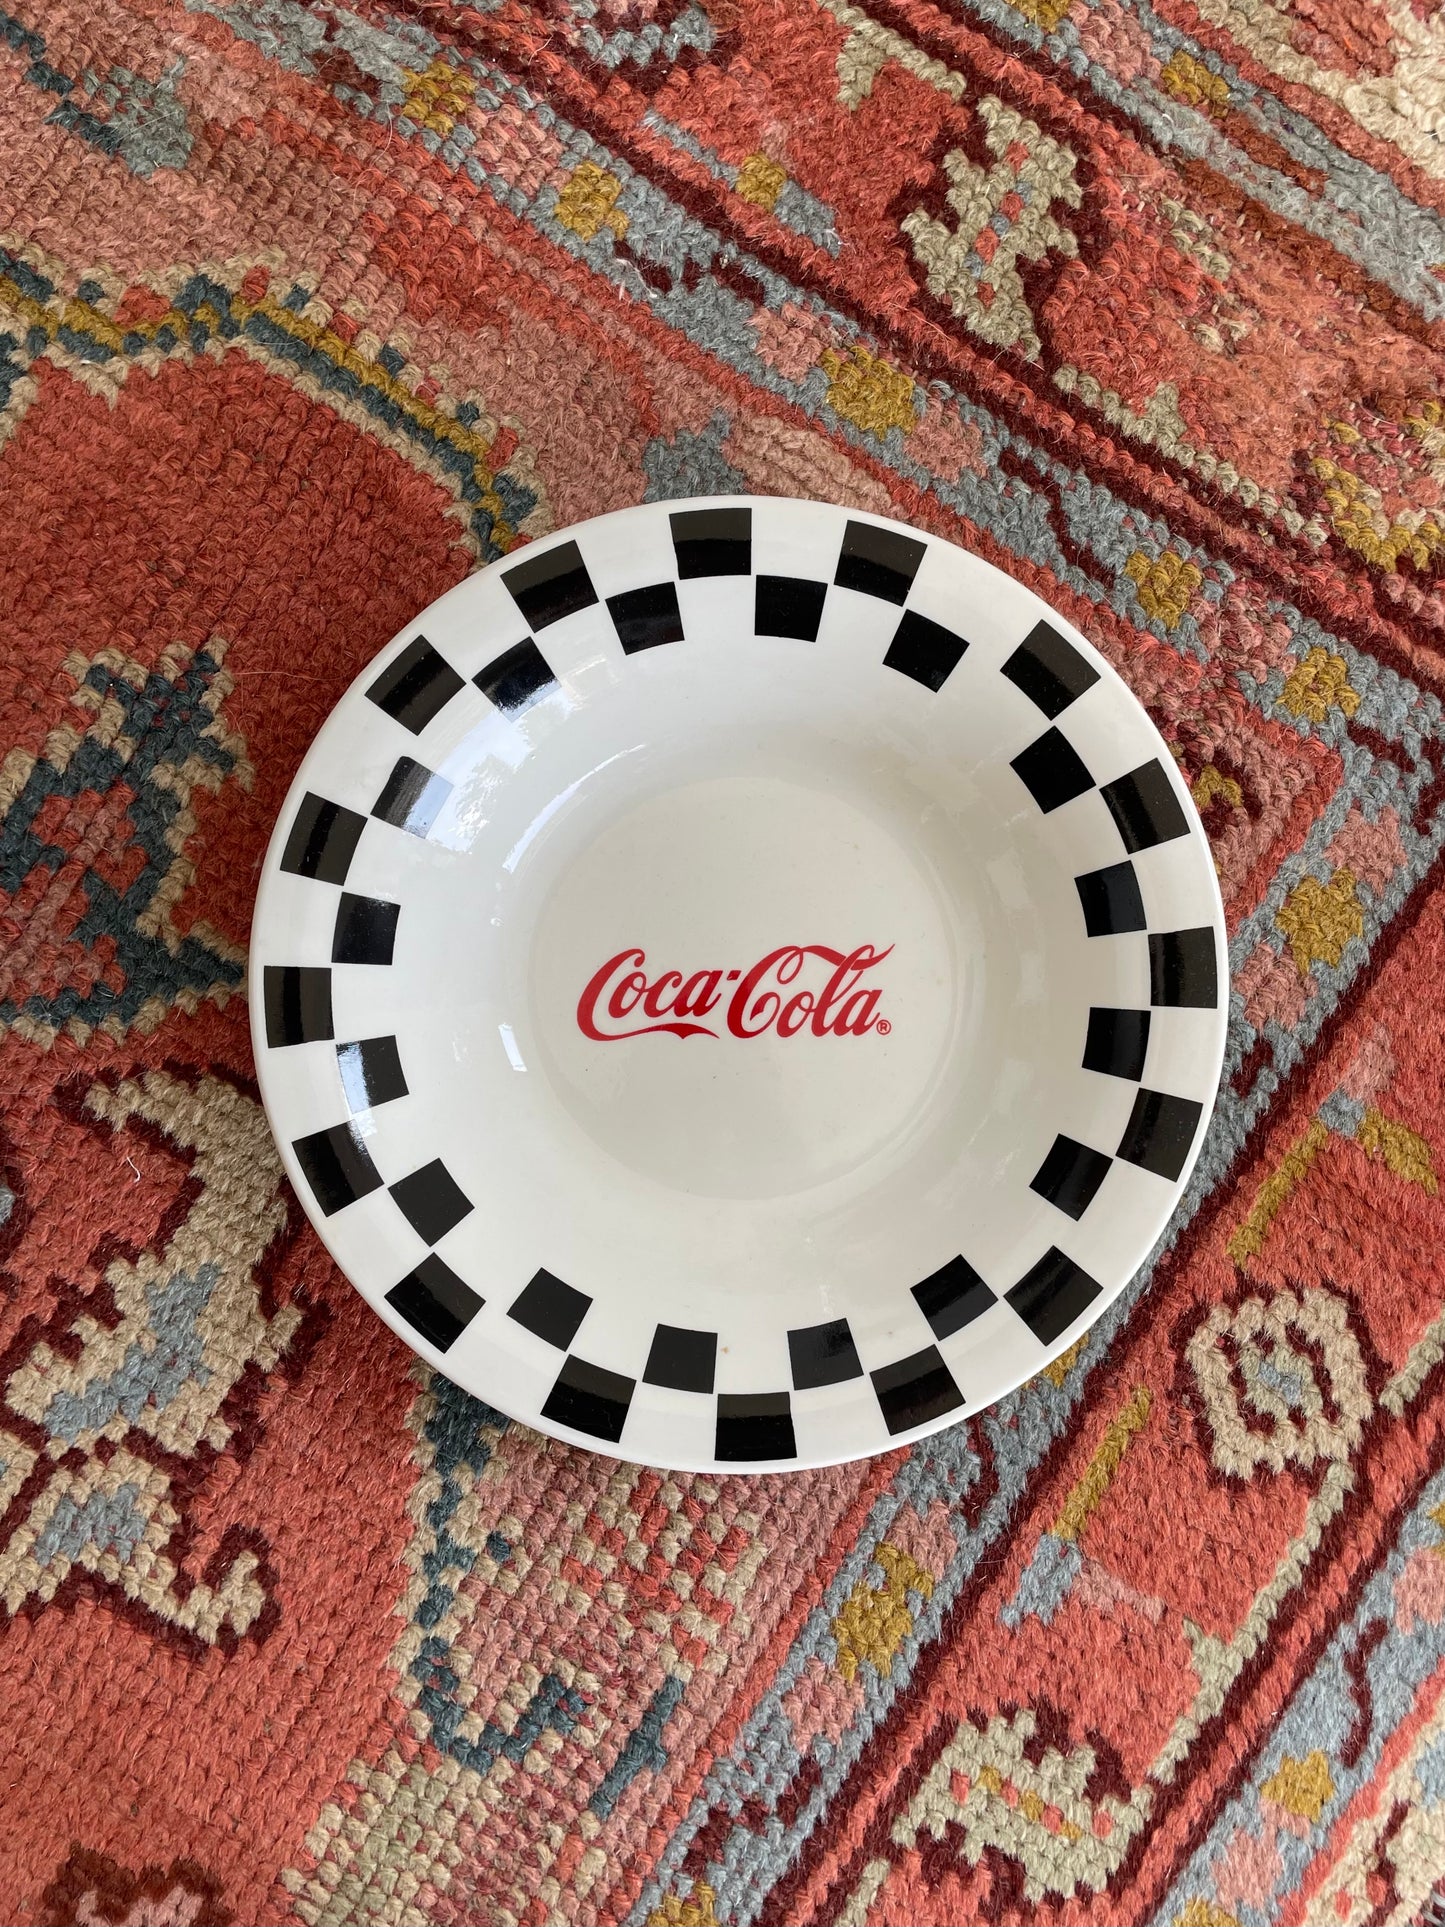 Coca-Cola Bowl - 1996